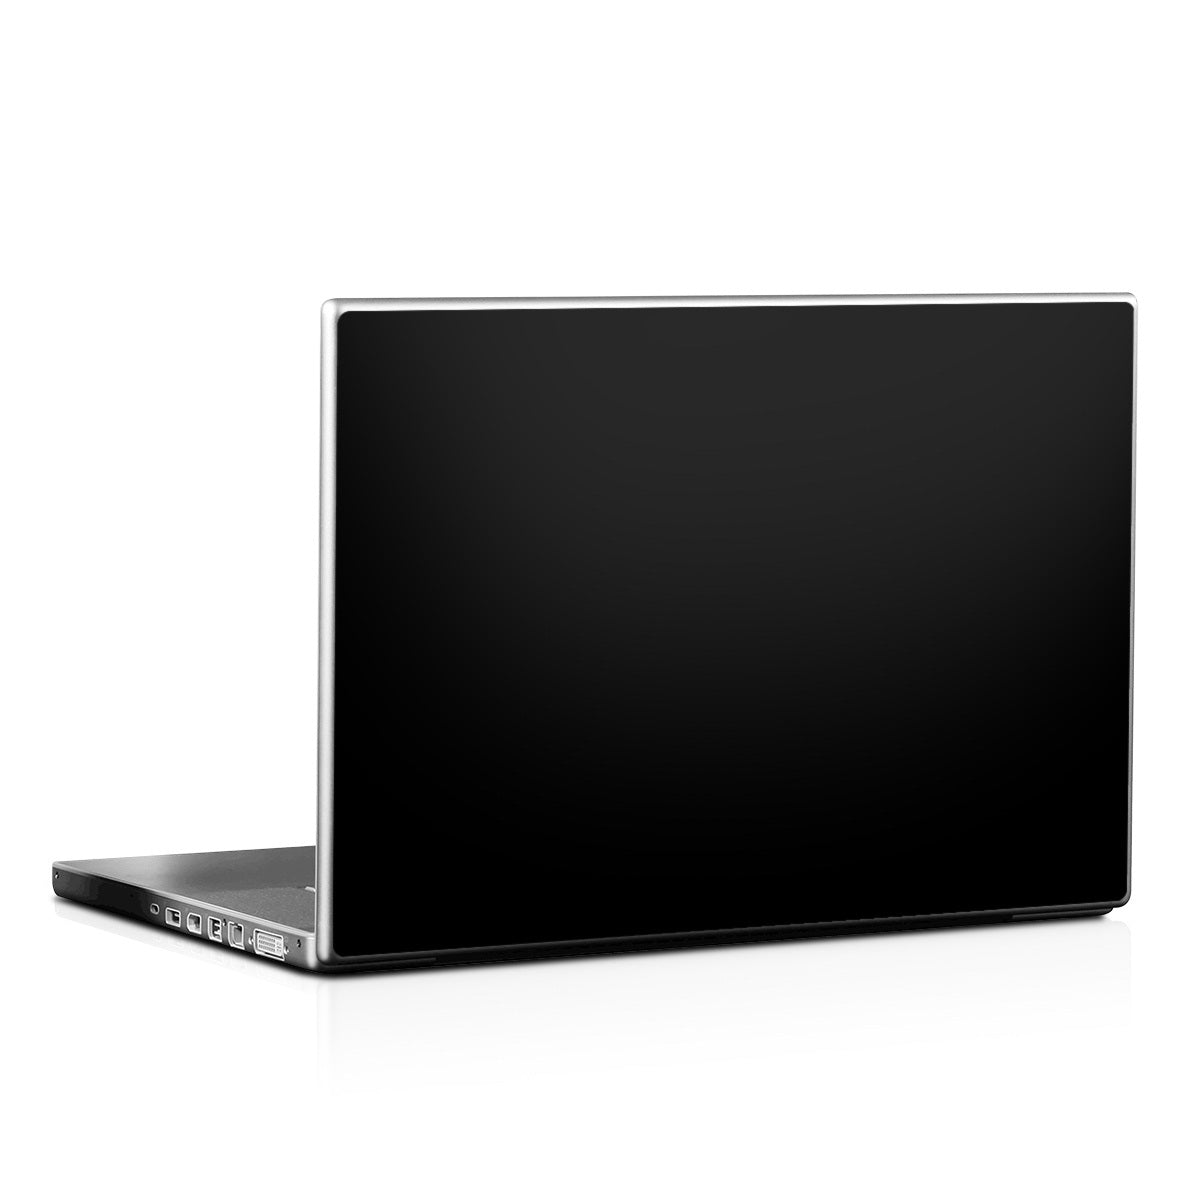 Solid State Black - Laptop Lid Skin